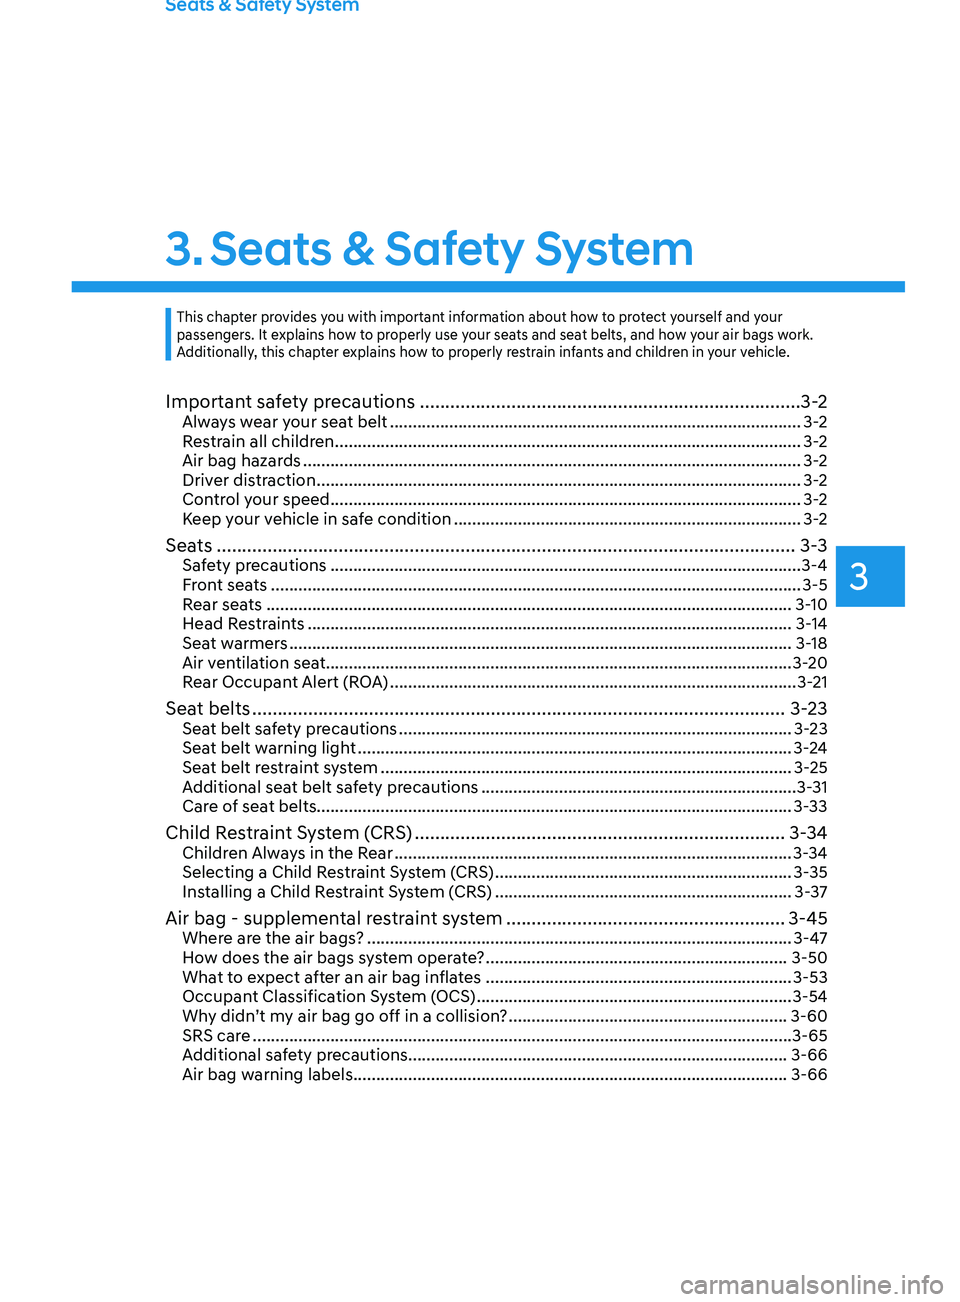 HYUNDAI SANTA FE LIMITED 2021  Owners Manual Seats & Safety System
3. Seats & Safety System
Important safety precautions ........................................................................\
... 3-2Always wear your seat belt ................